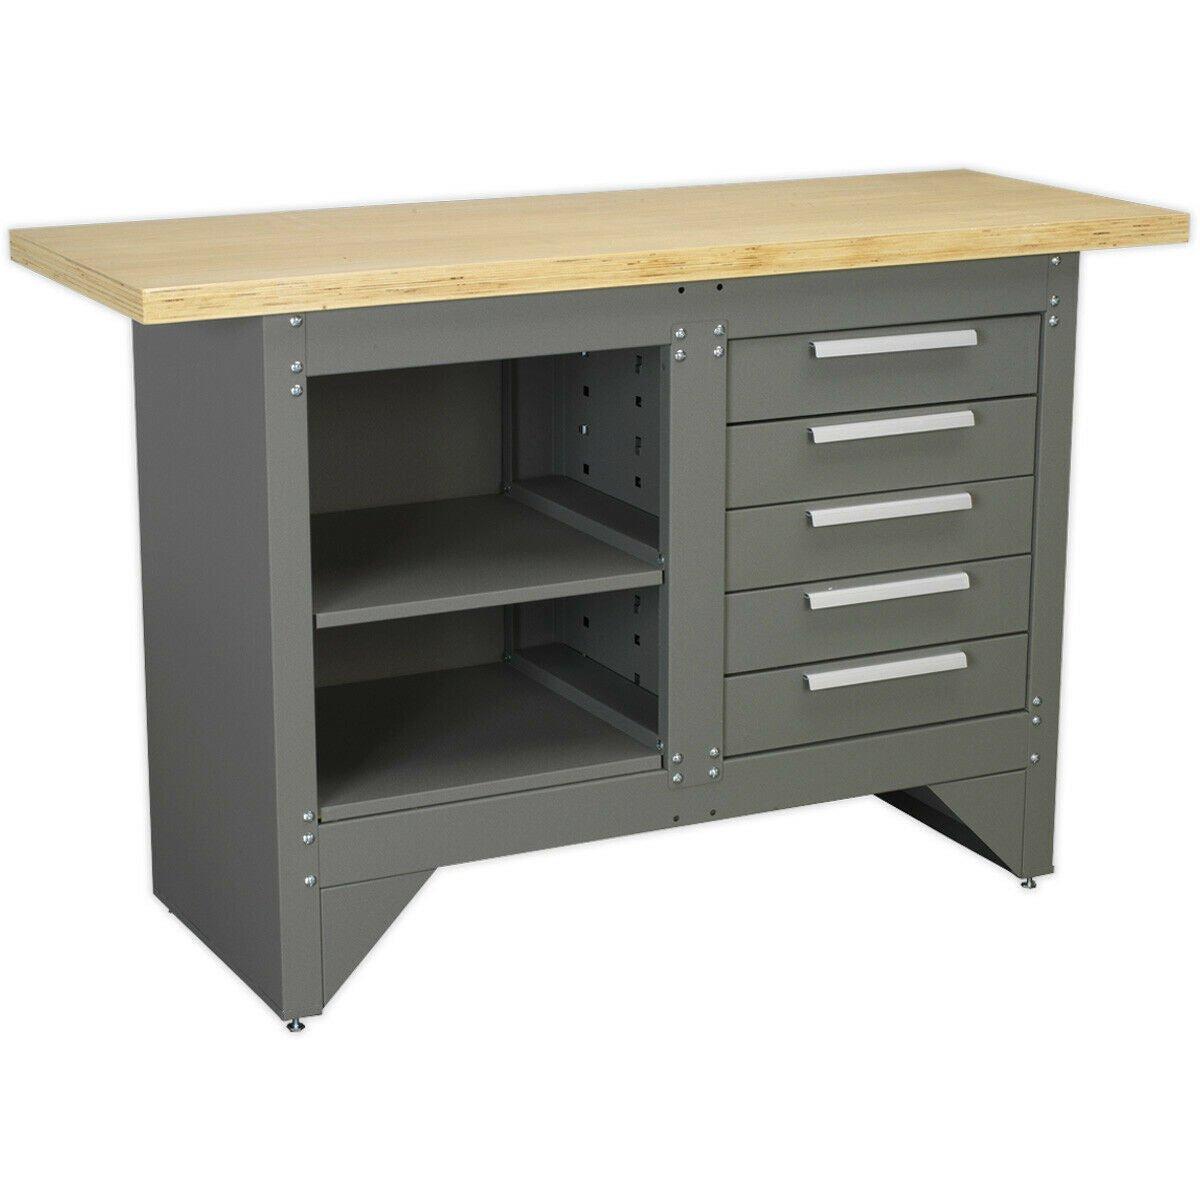 Heavy Duty Steel Workbench - Shelf & 5 Draw Storage - Wooden Work Top Station